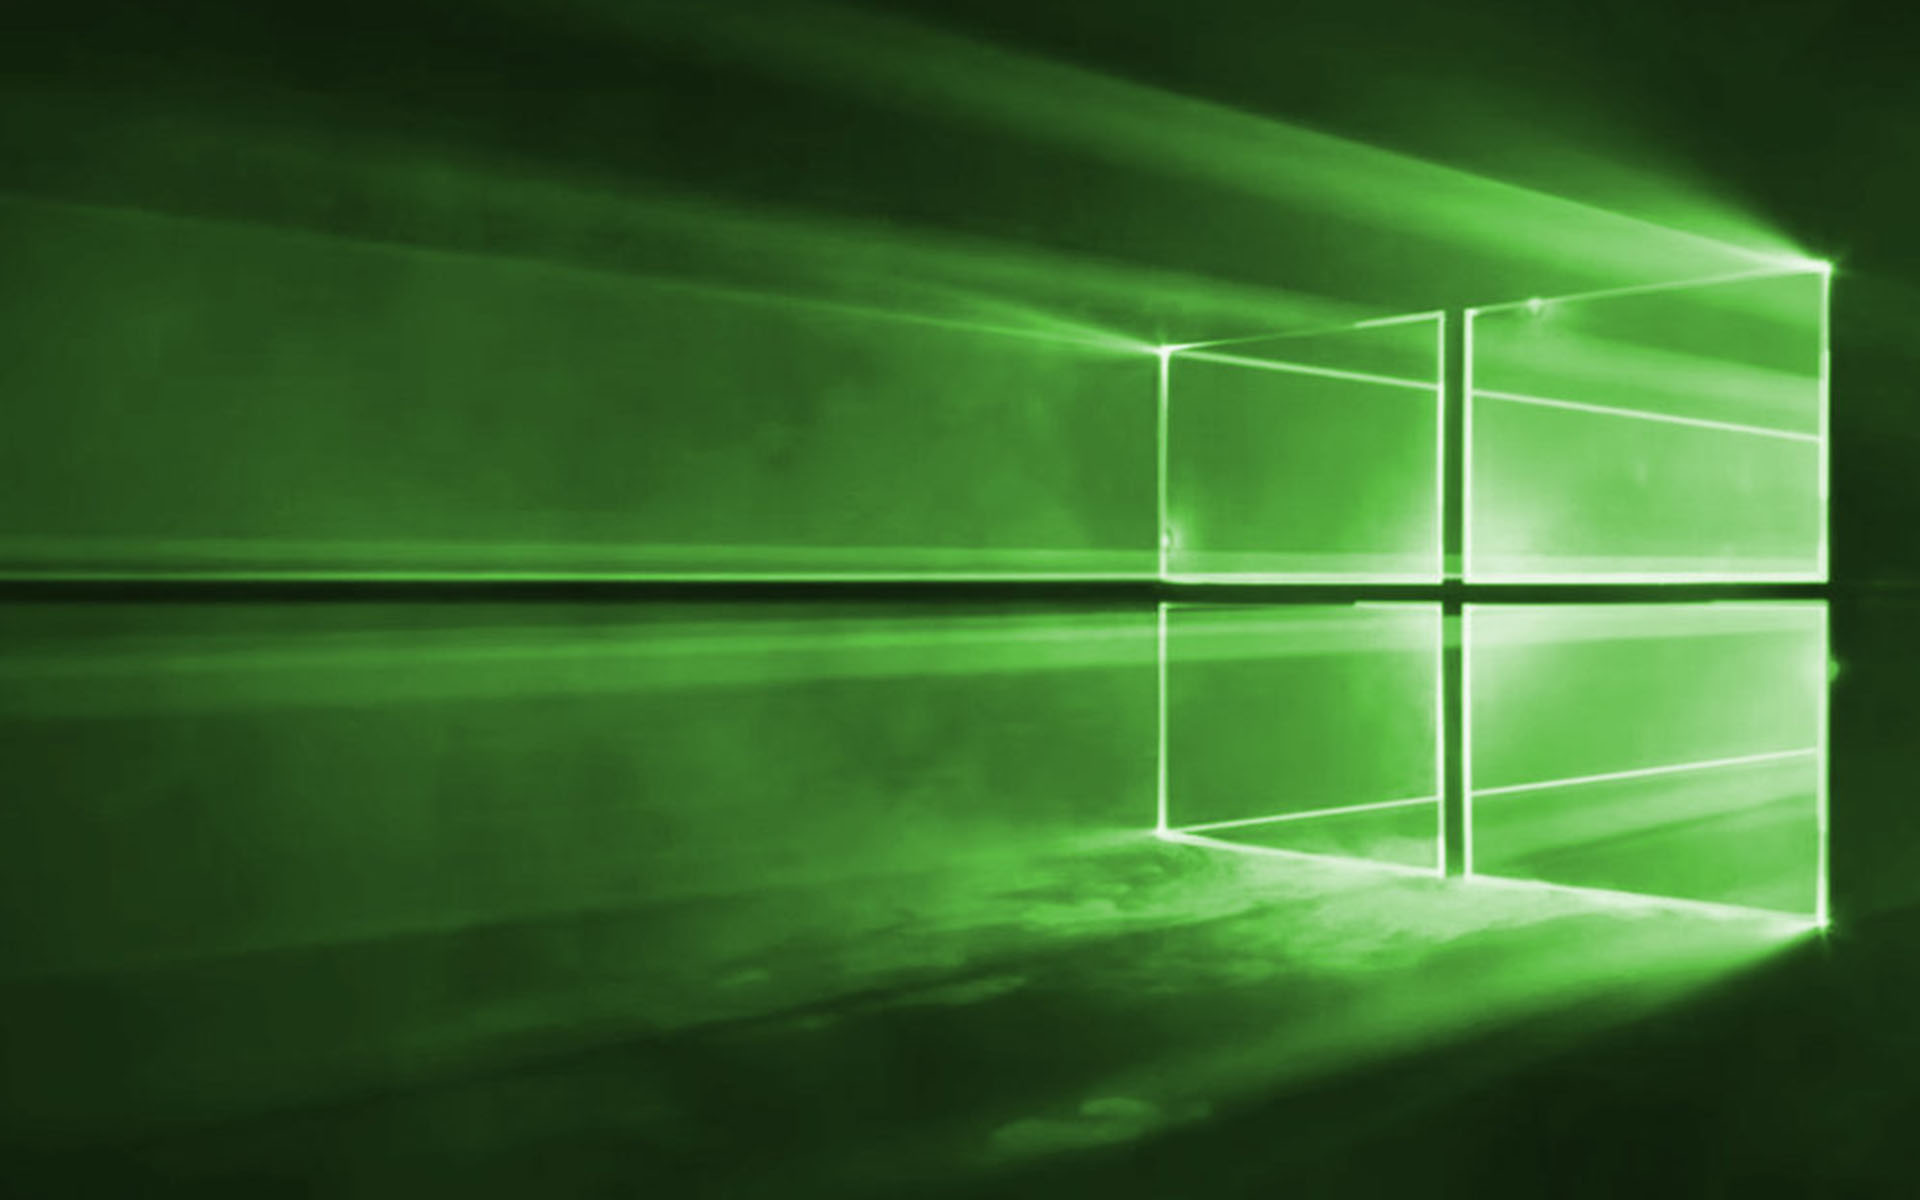 46+] Windows 10 Green Wallpaper - WallpaperSafari